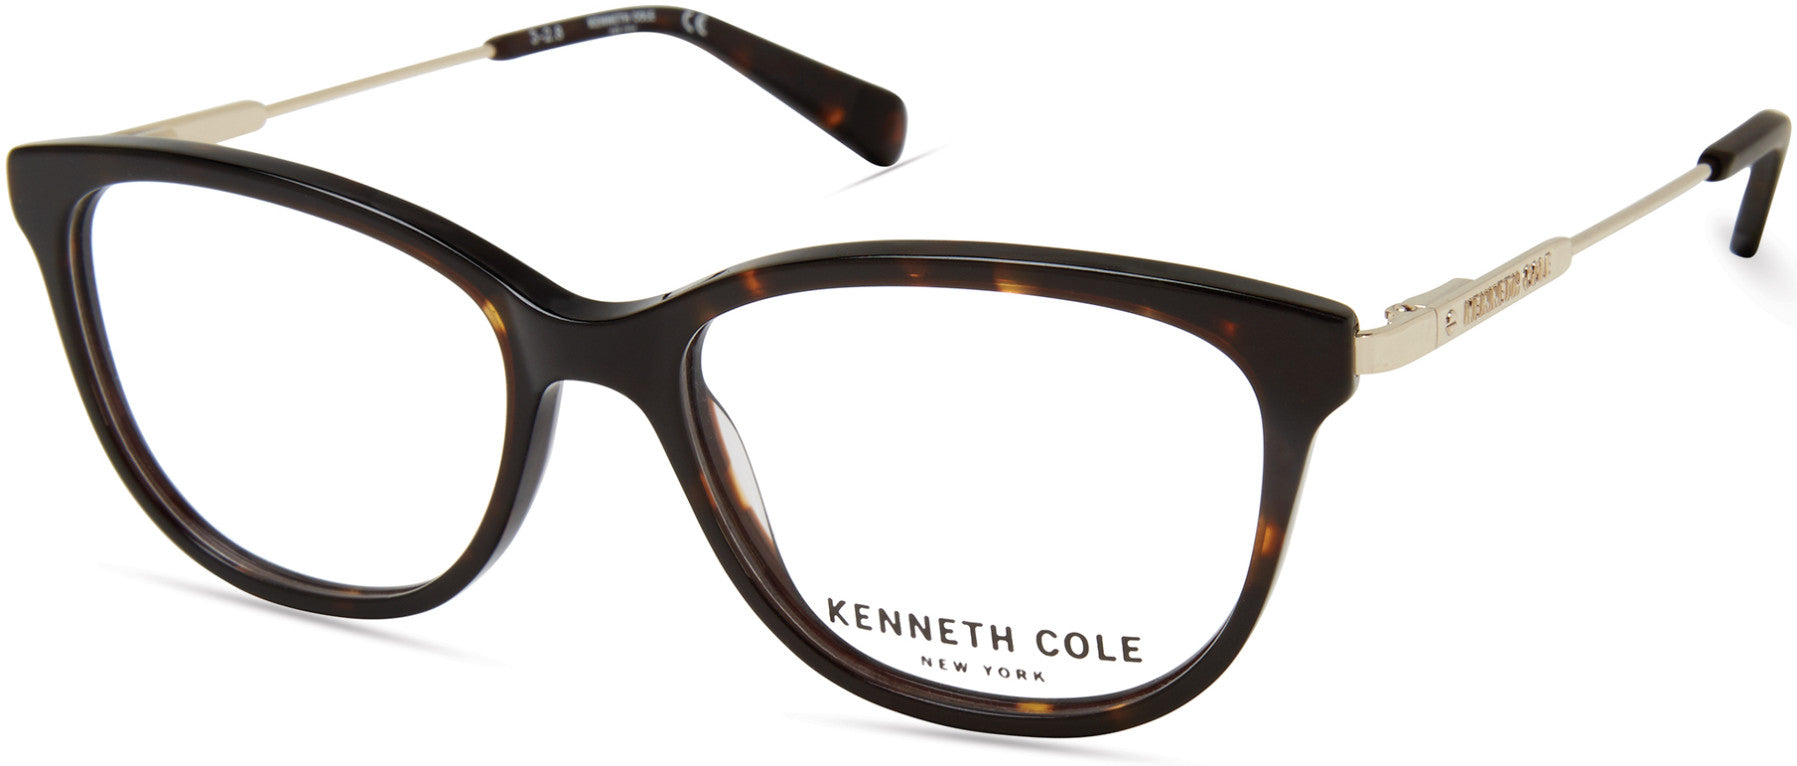 Kenneth Cole New York,Kenneth Cole Reaction KC0298 Square Eyeglasses 052-052 - Dark Havana